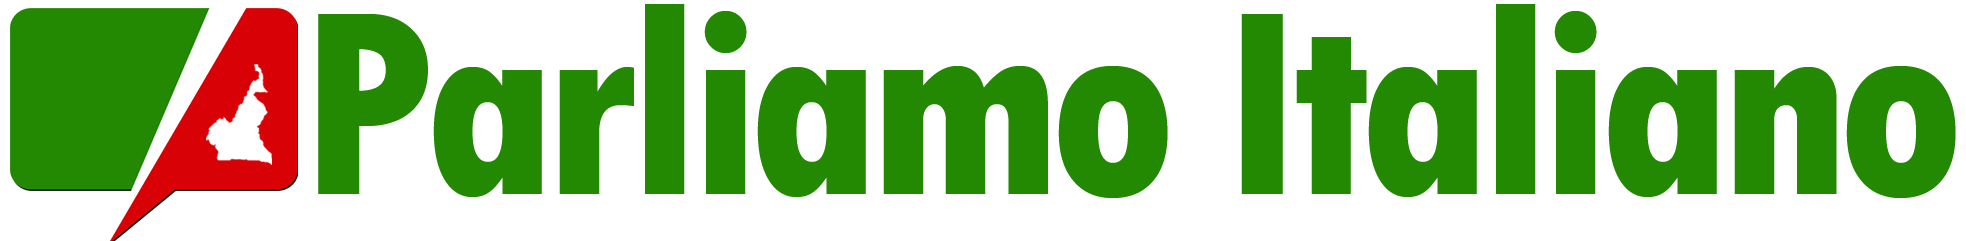 Parliamo Italiano Camerun Logo